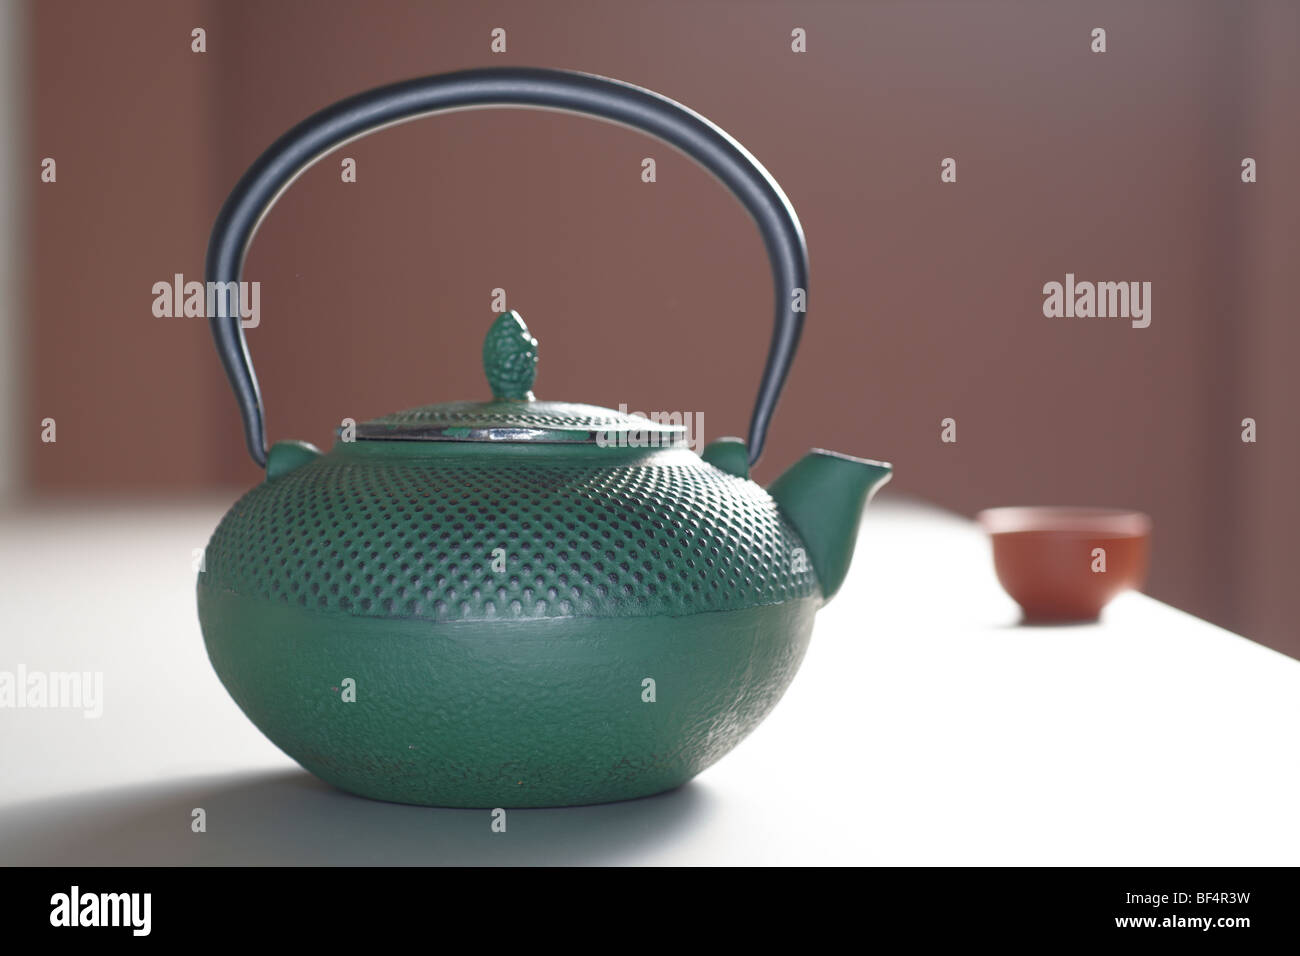 Cast iron teapot with a teacup Stock Photo